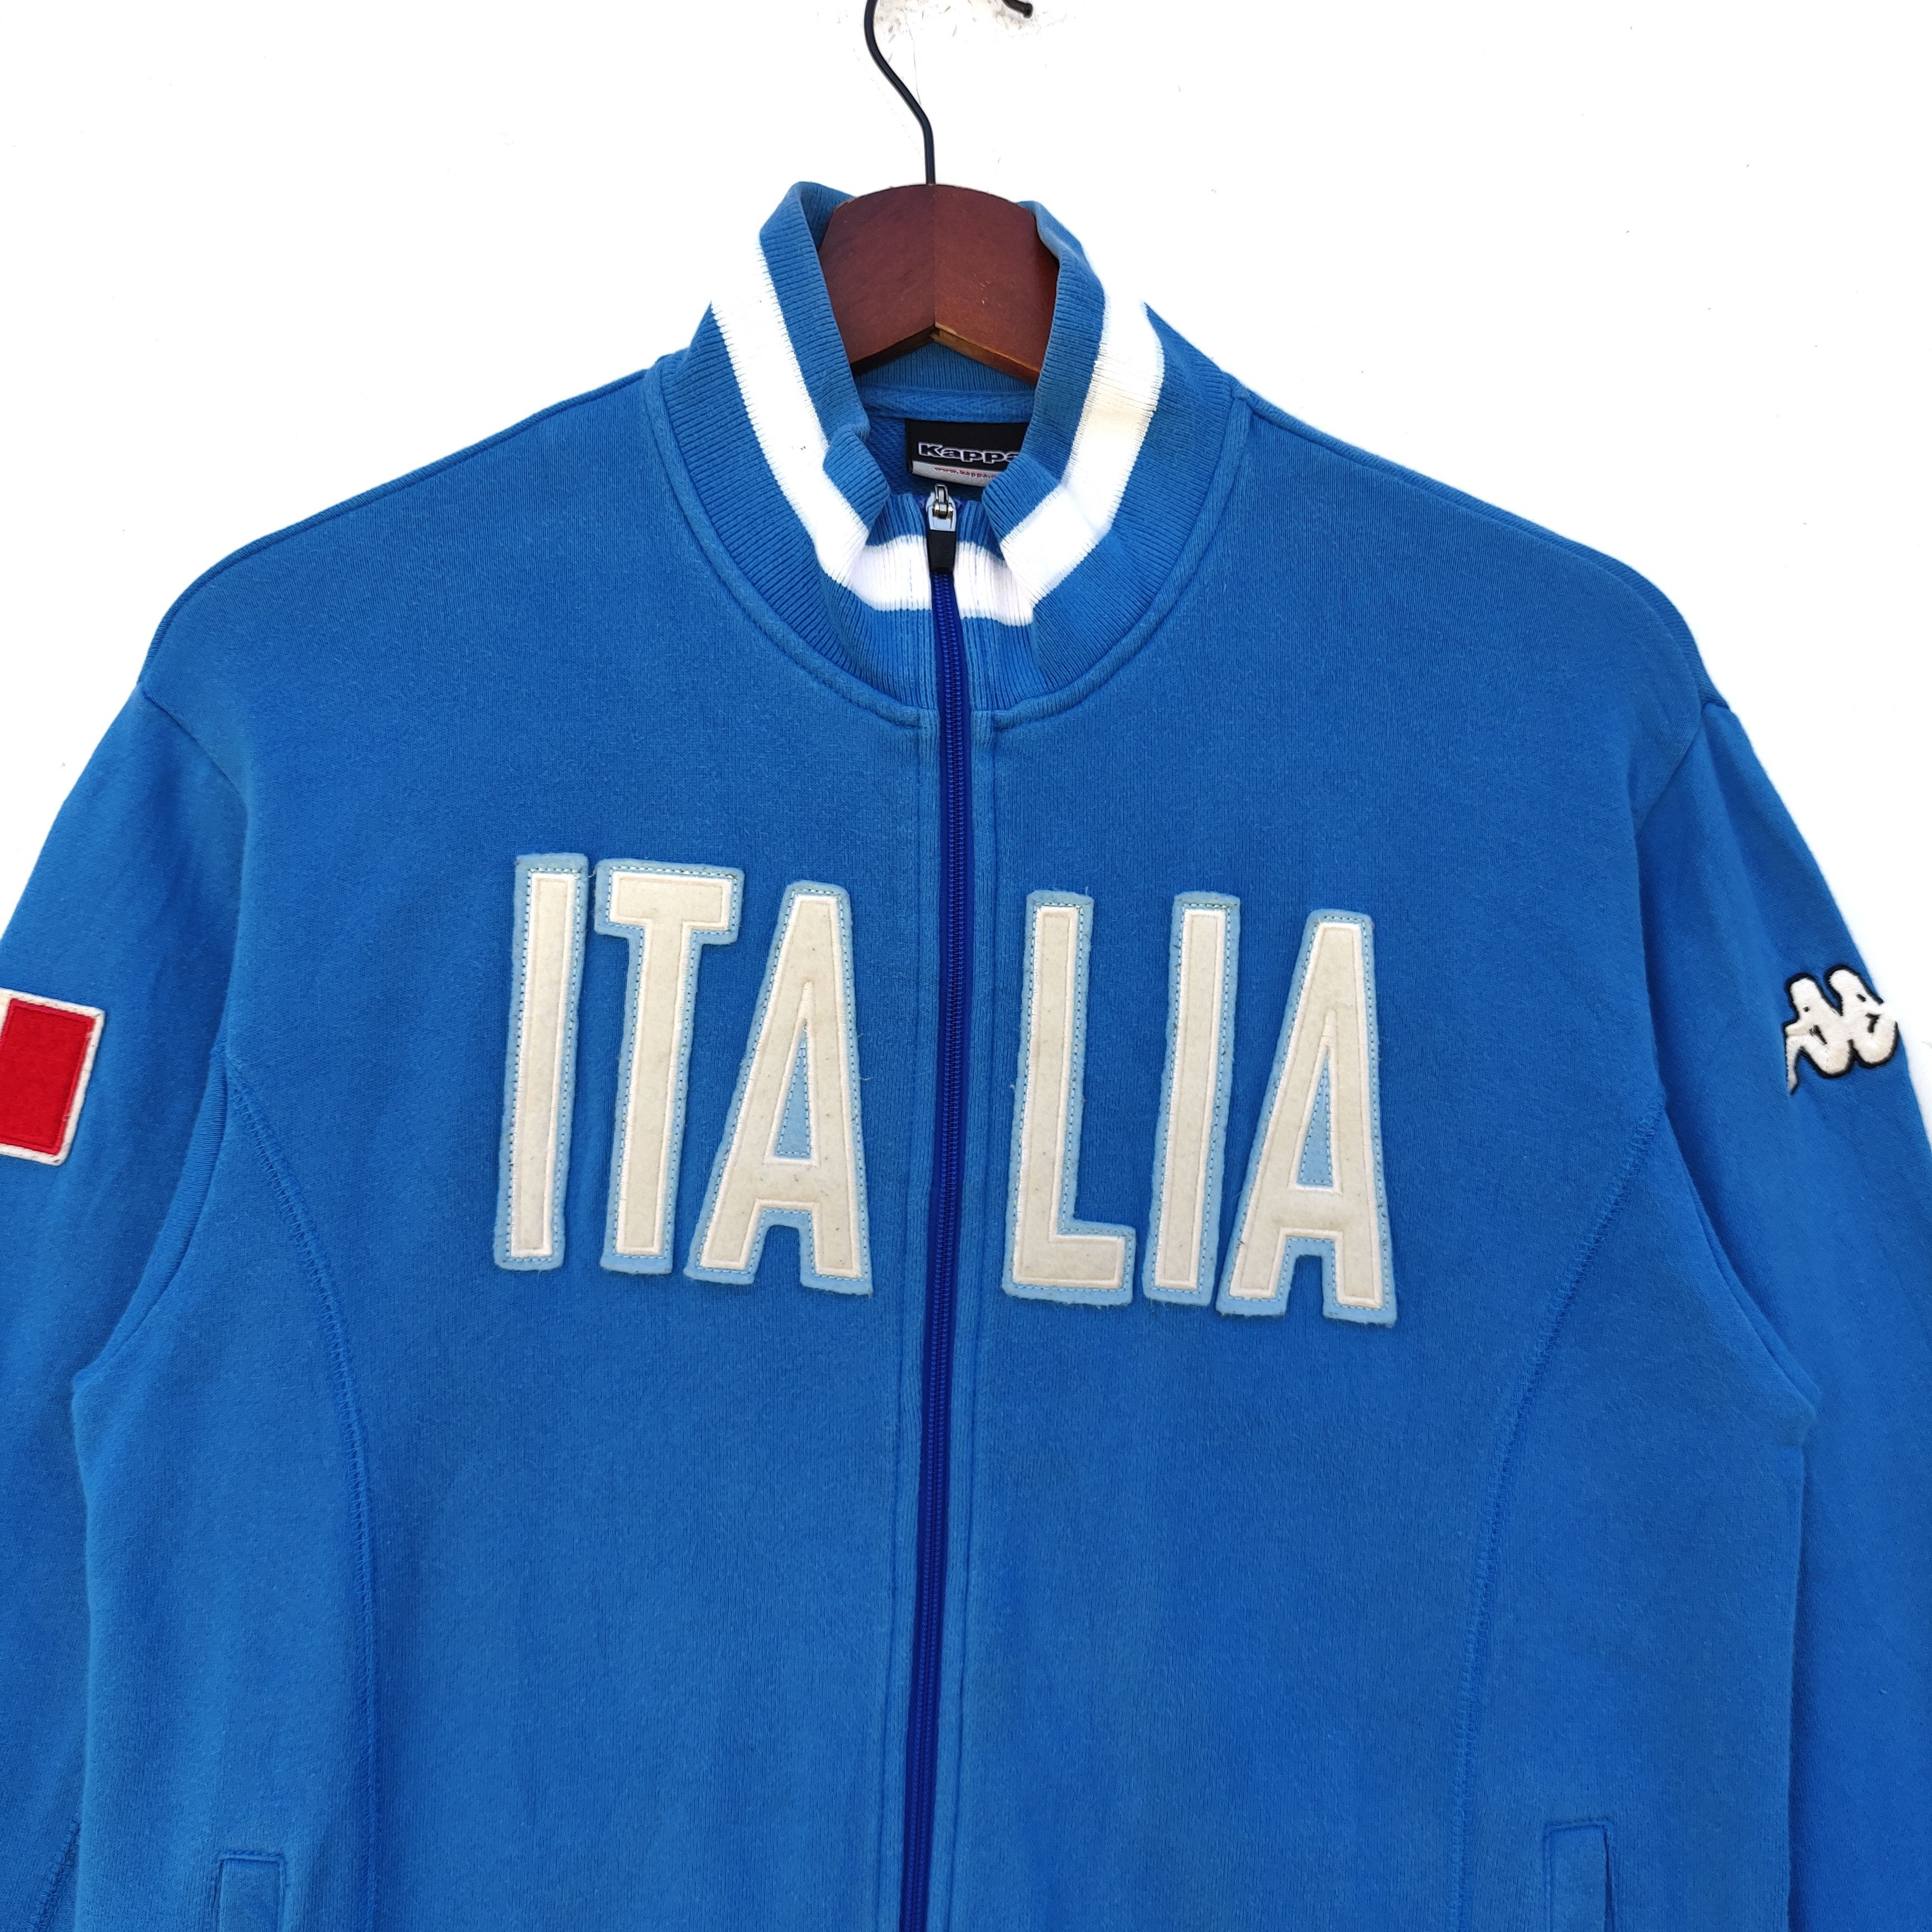 Vintage Vintage Kappa Italia Zipper Sweatshirt Size US M / EU 48-50 / 2 - 5 Thumbnail